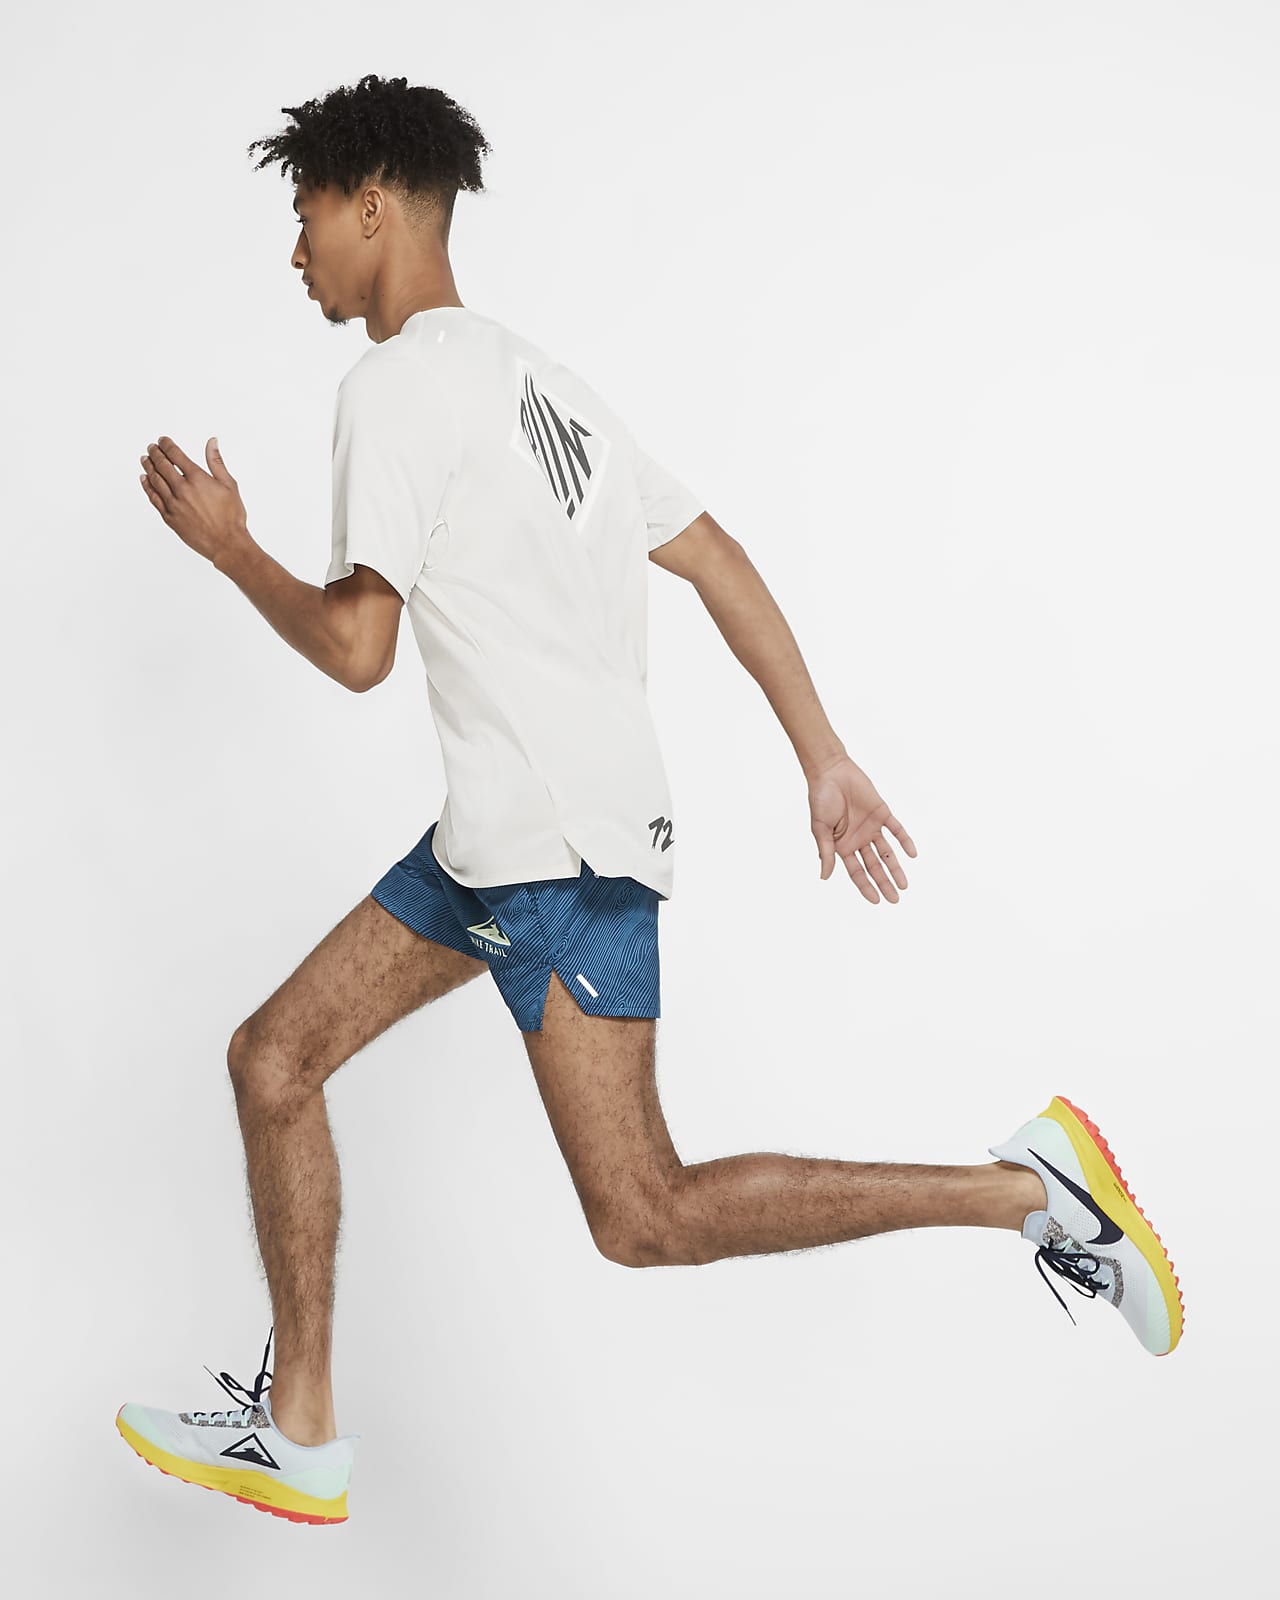 nike flex stride trail running shorts